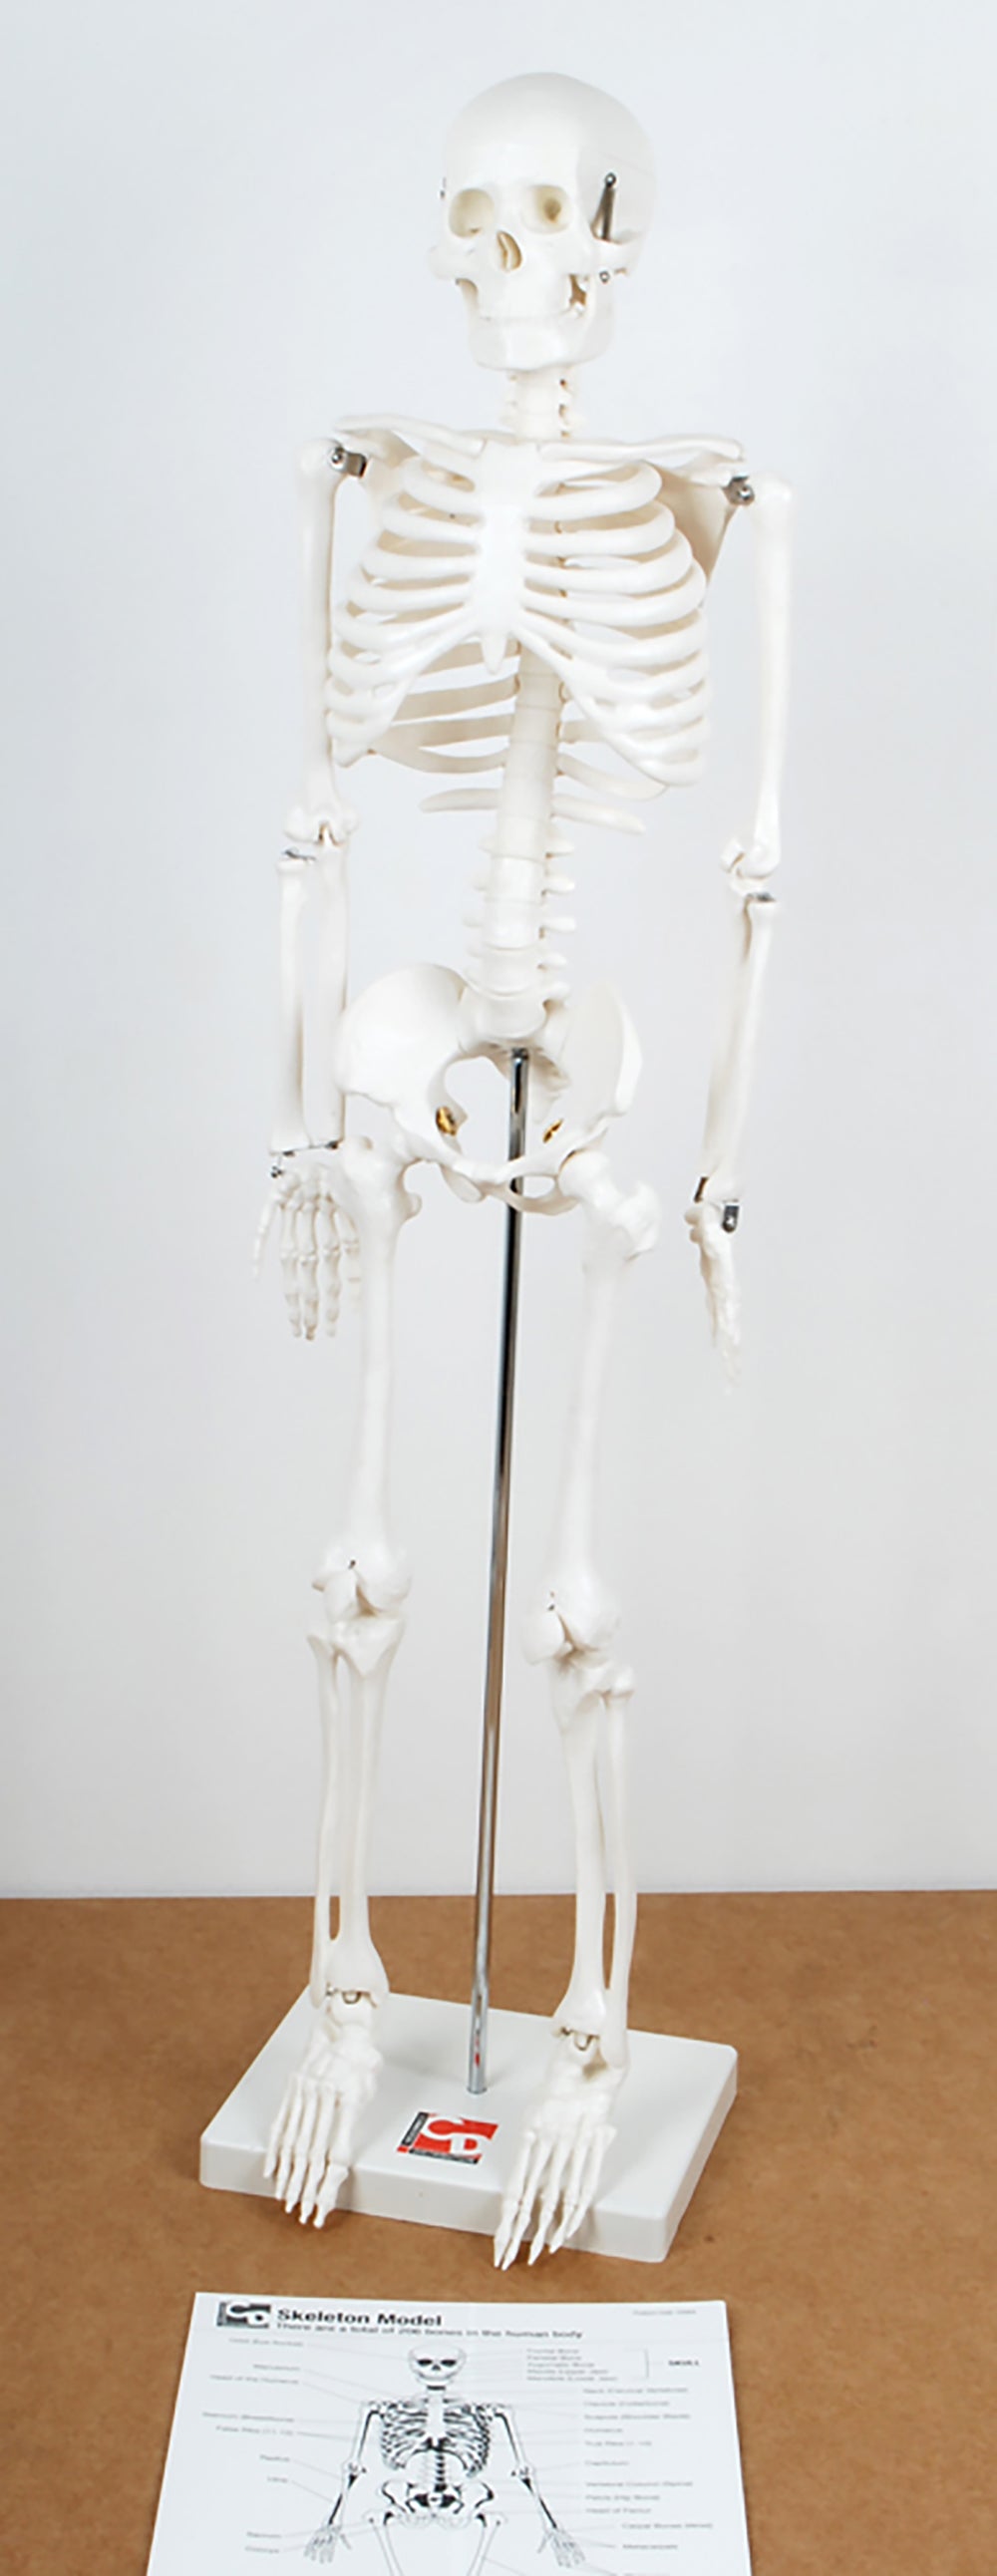 Half Size Skeleton